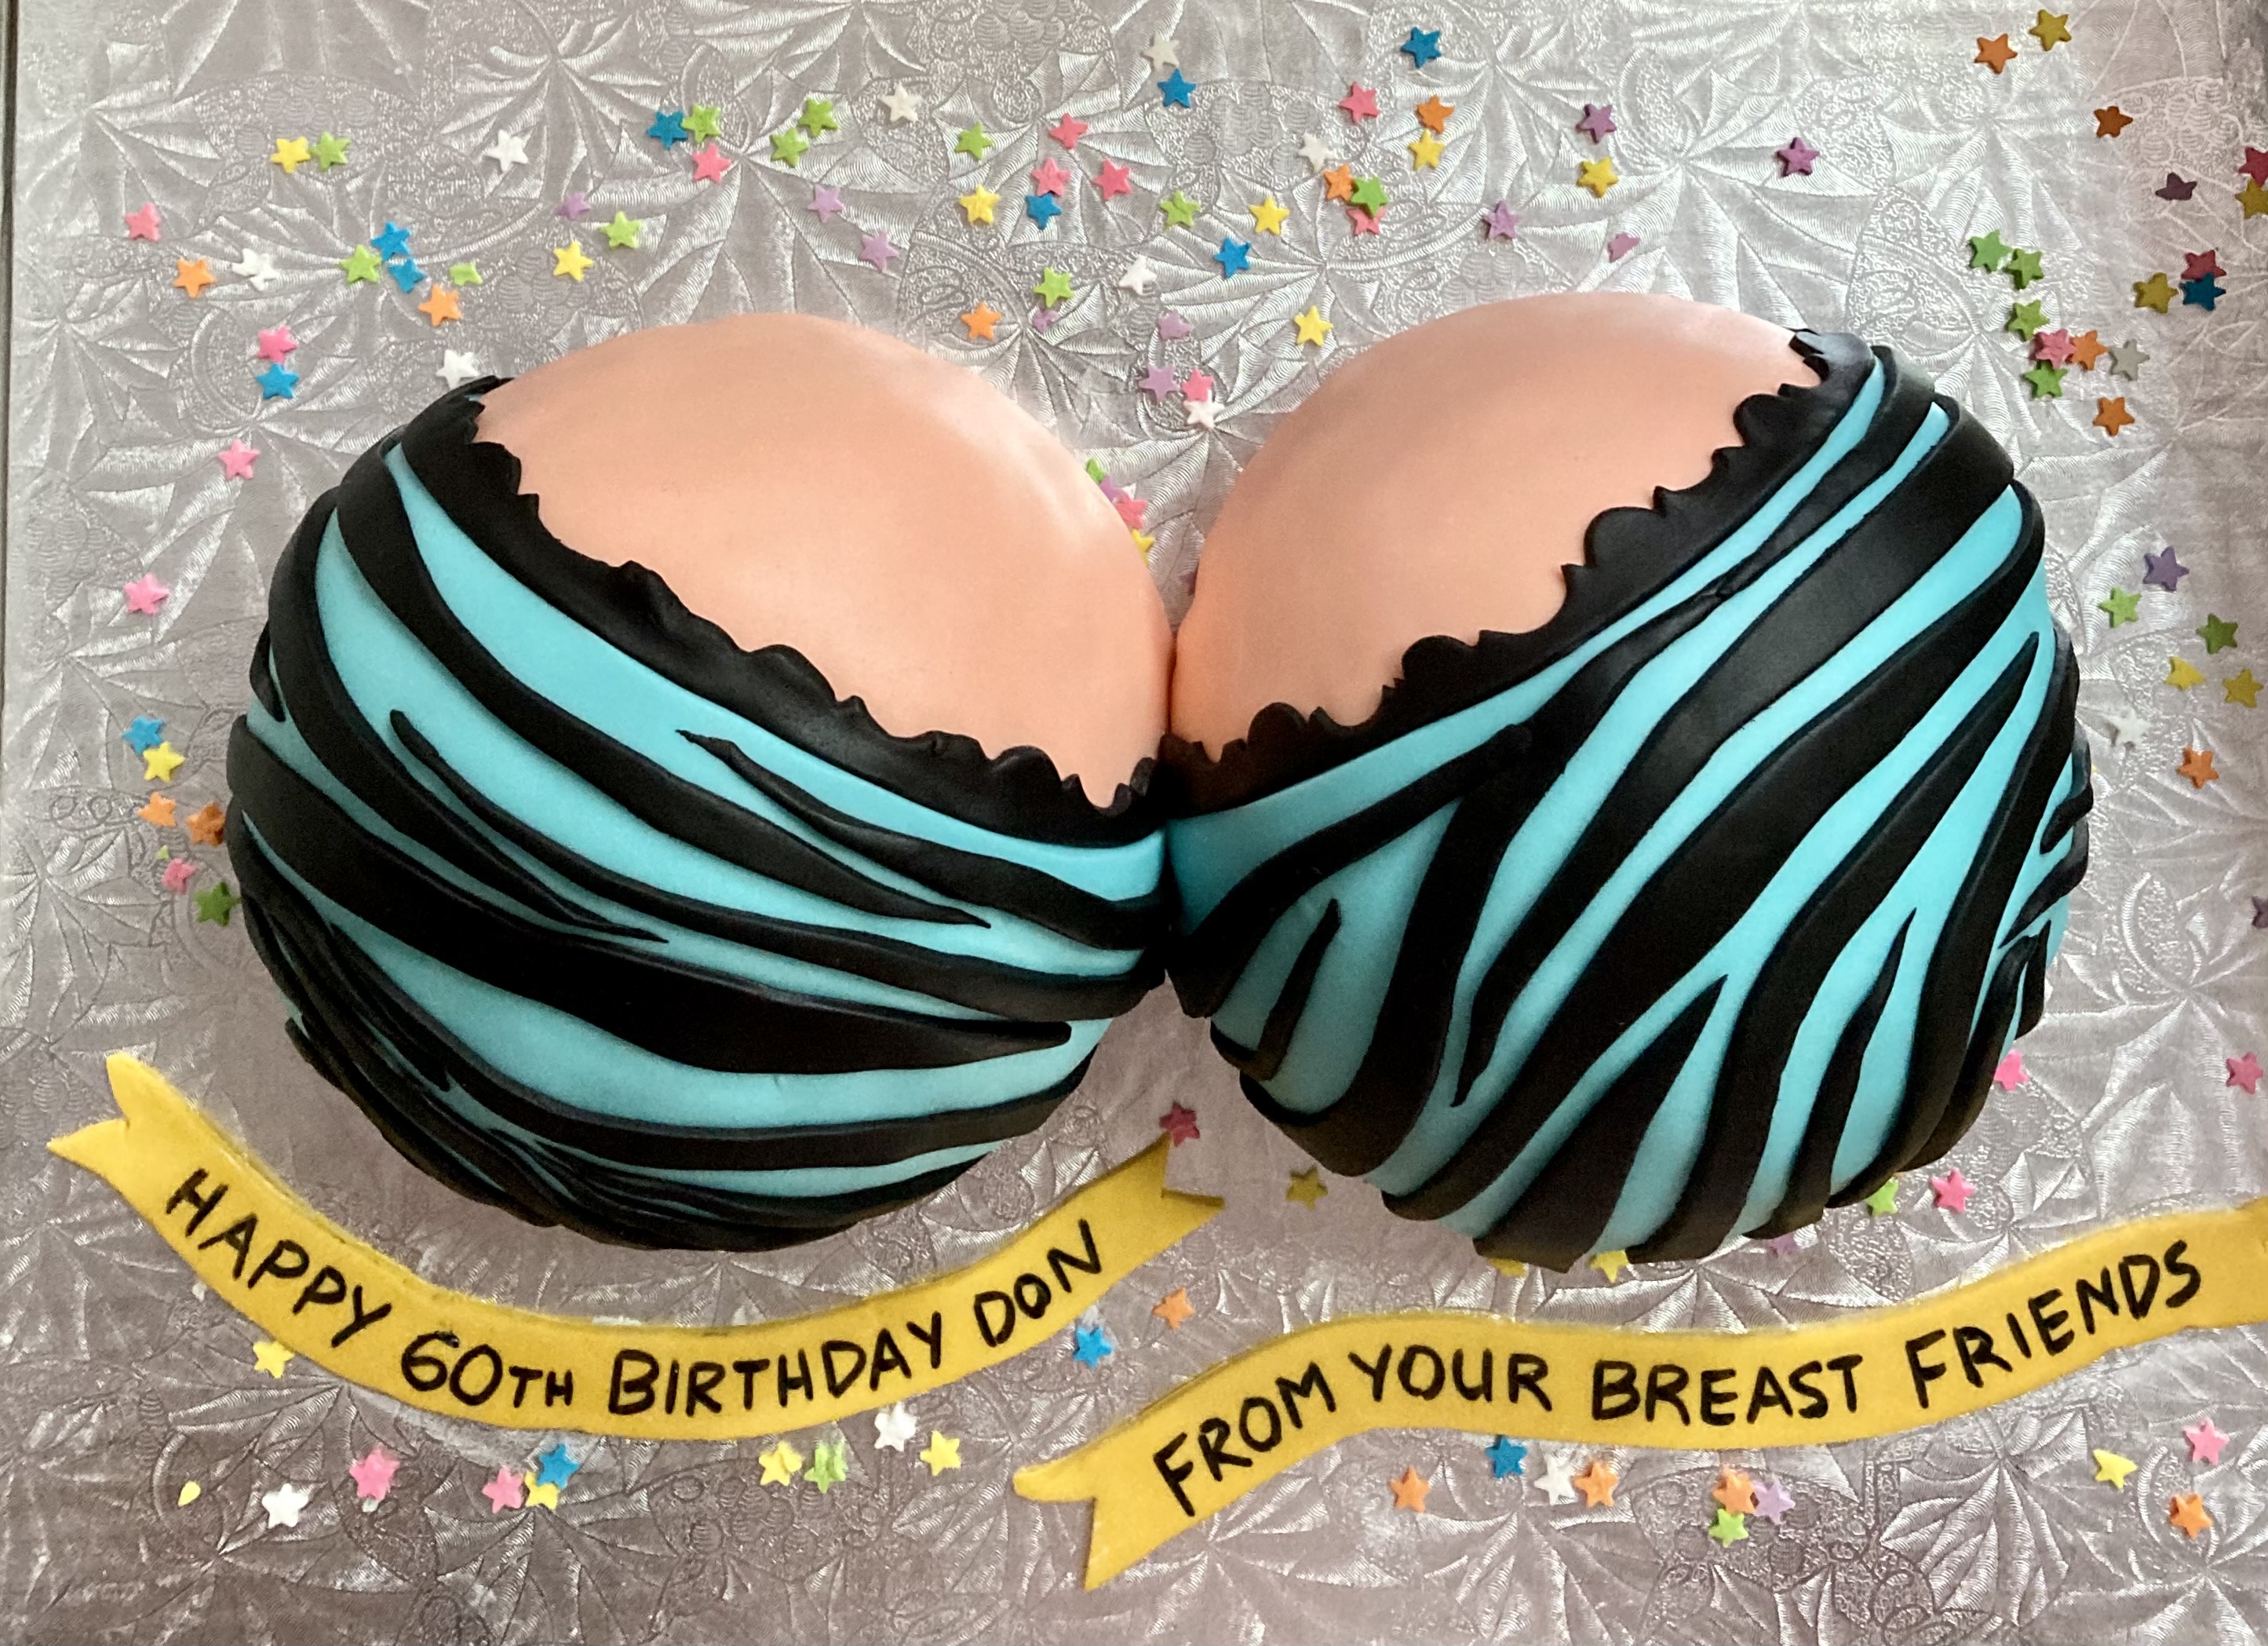 Breast friends – ronna's cake blog